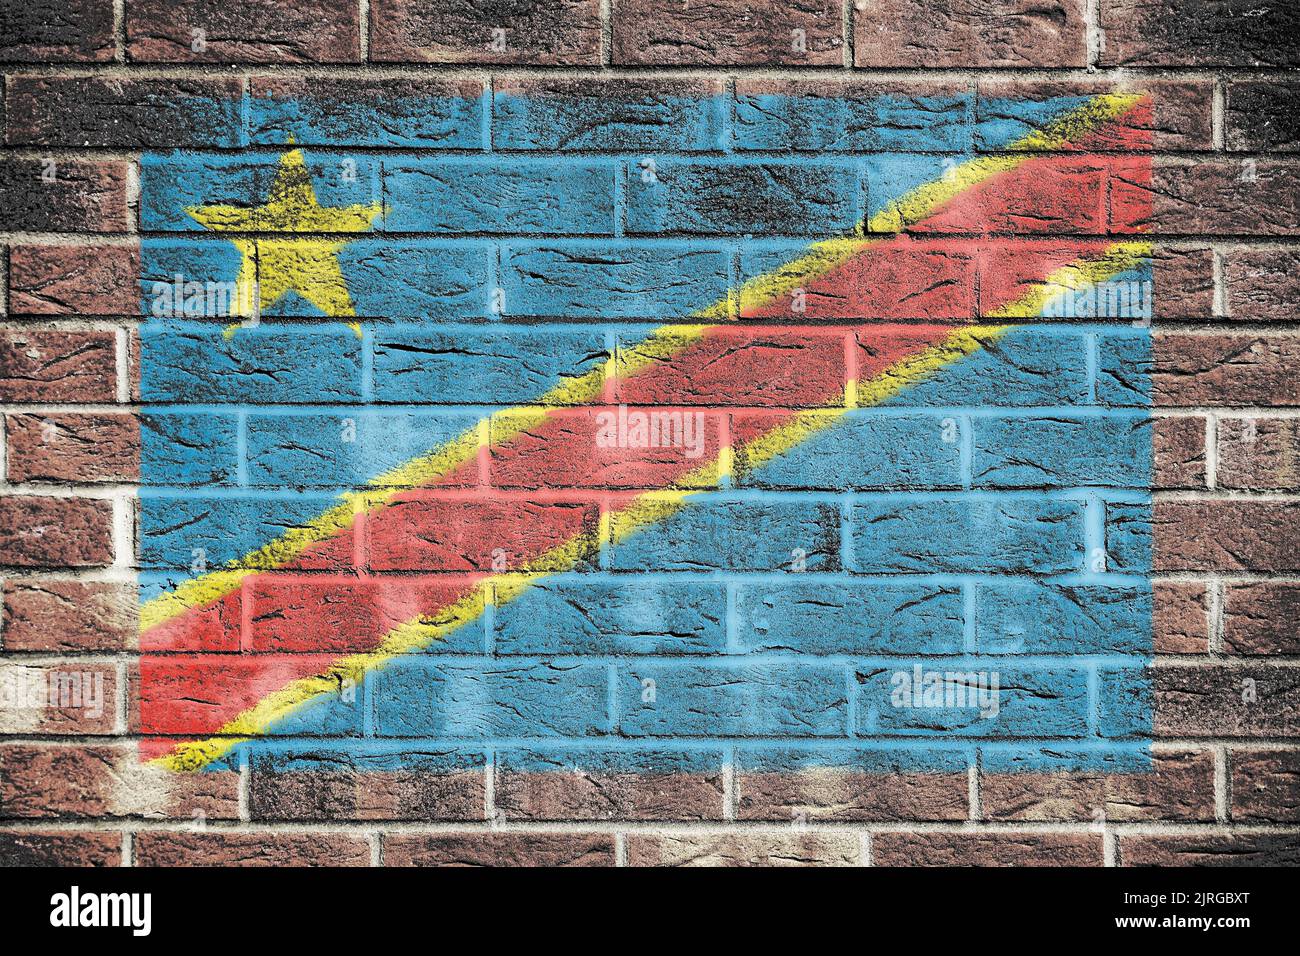 Democratic Republic of Congo flag on a brick wall background Stock Photo